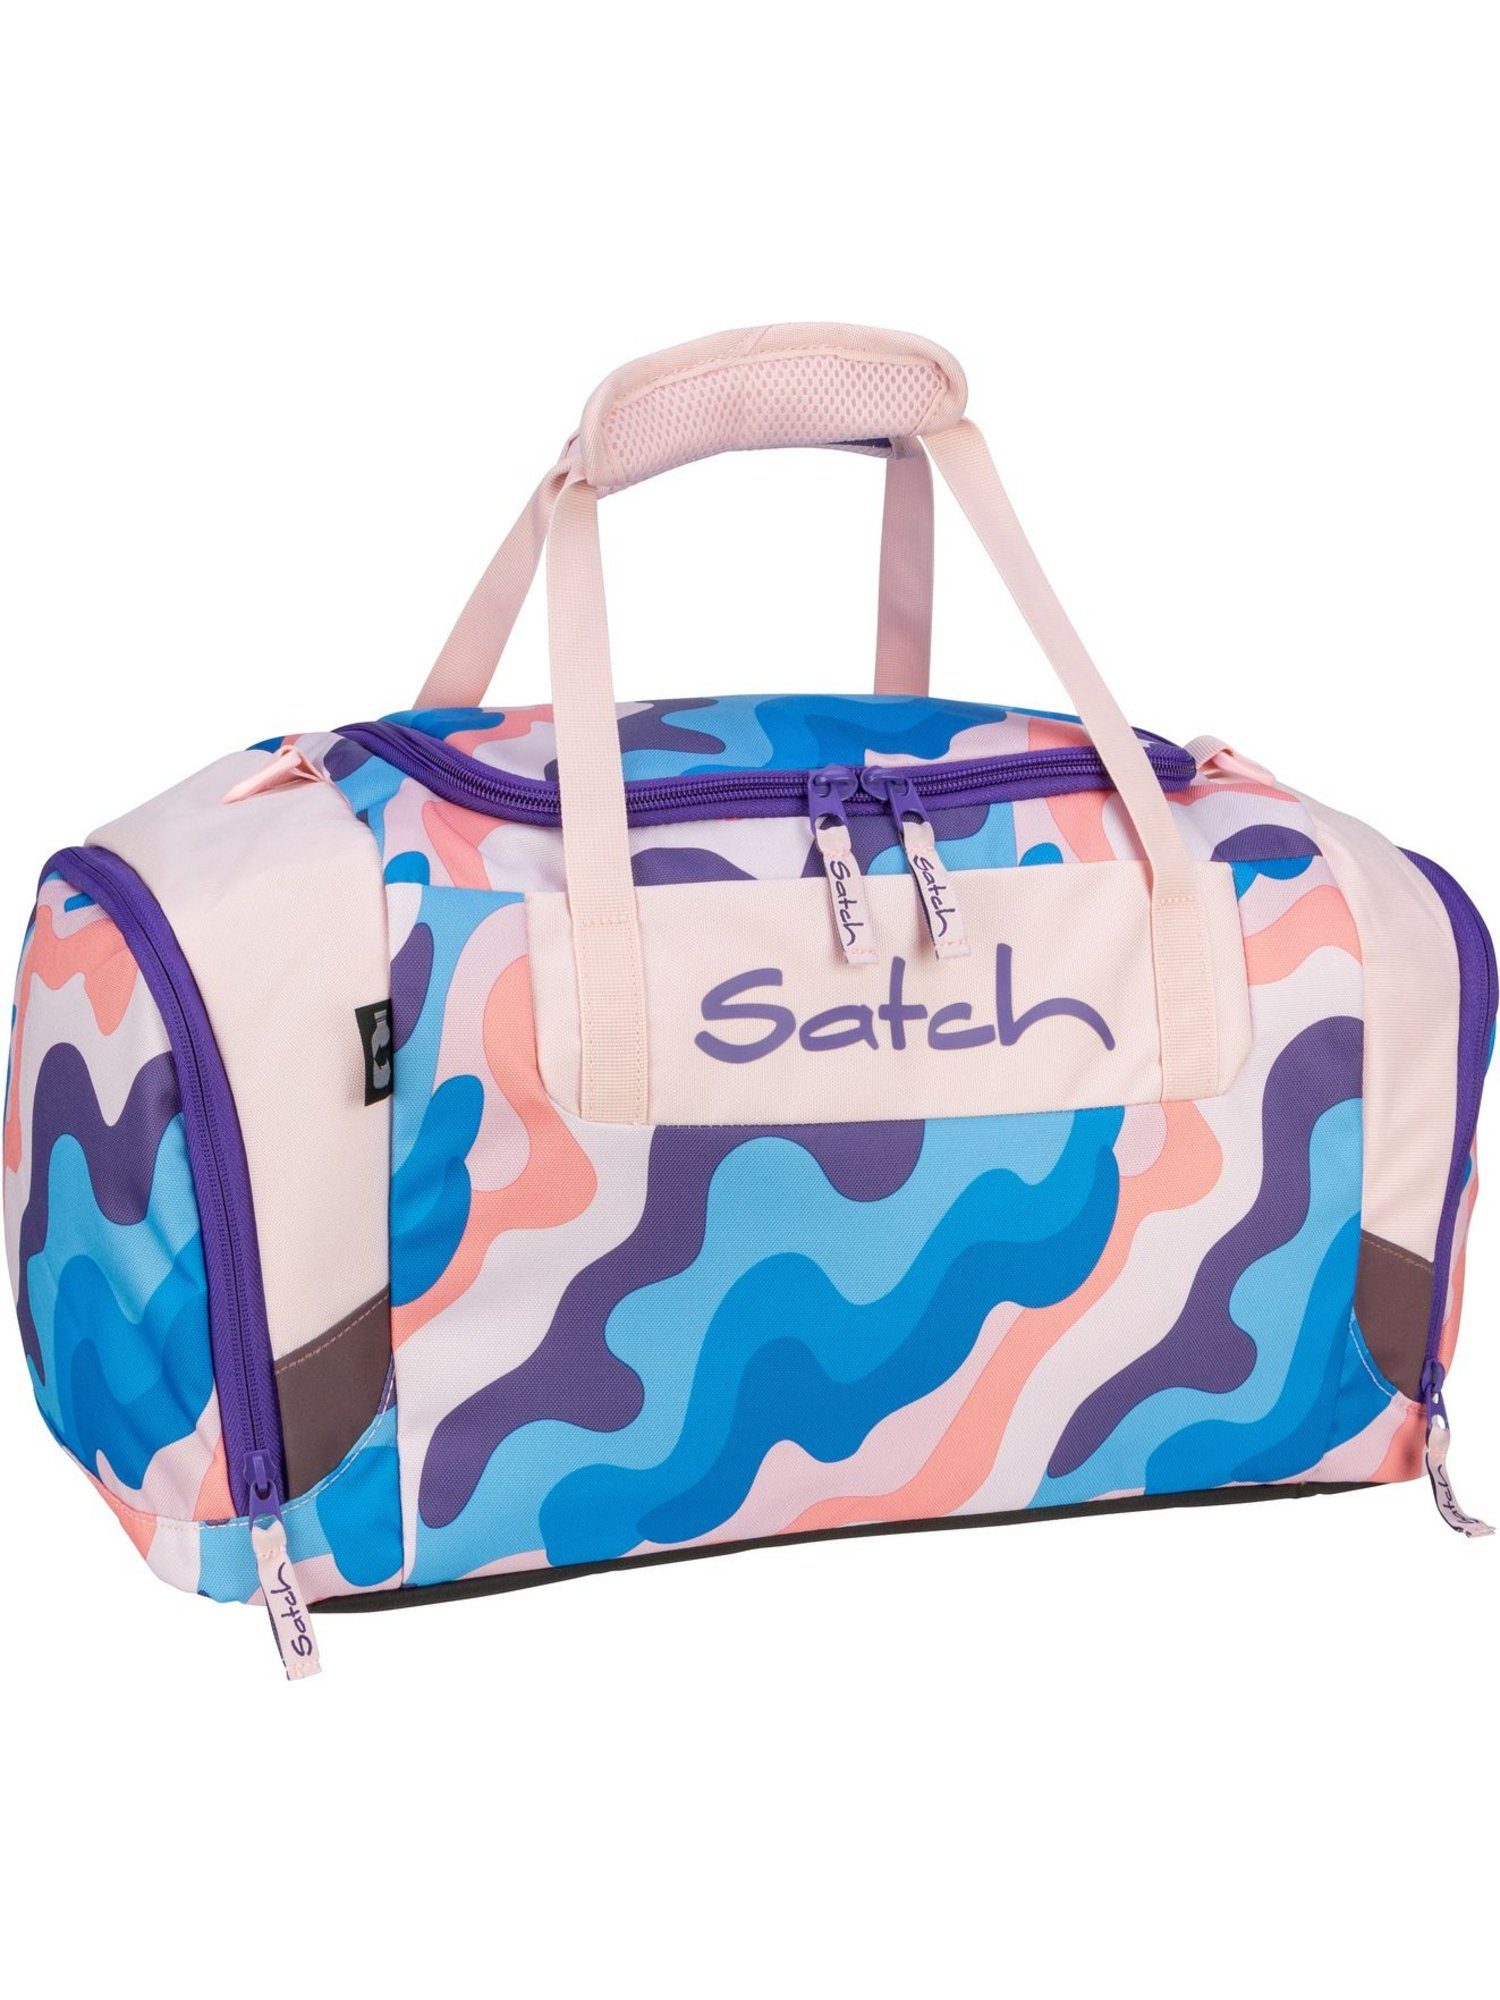 Satch Sporttasche satch Sporttasche 2.0 Candy Clouds